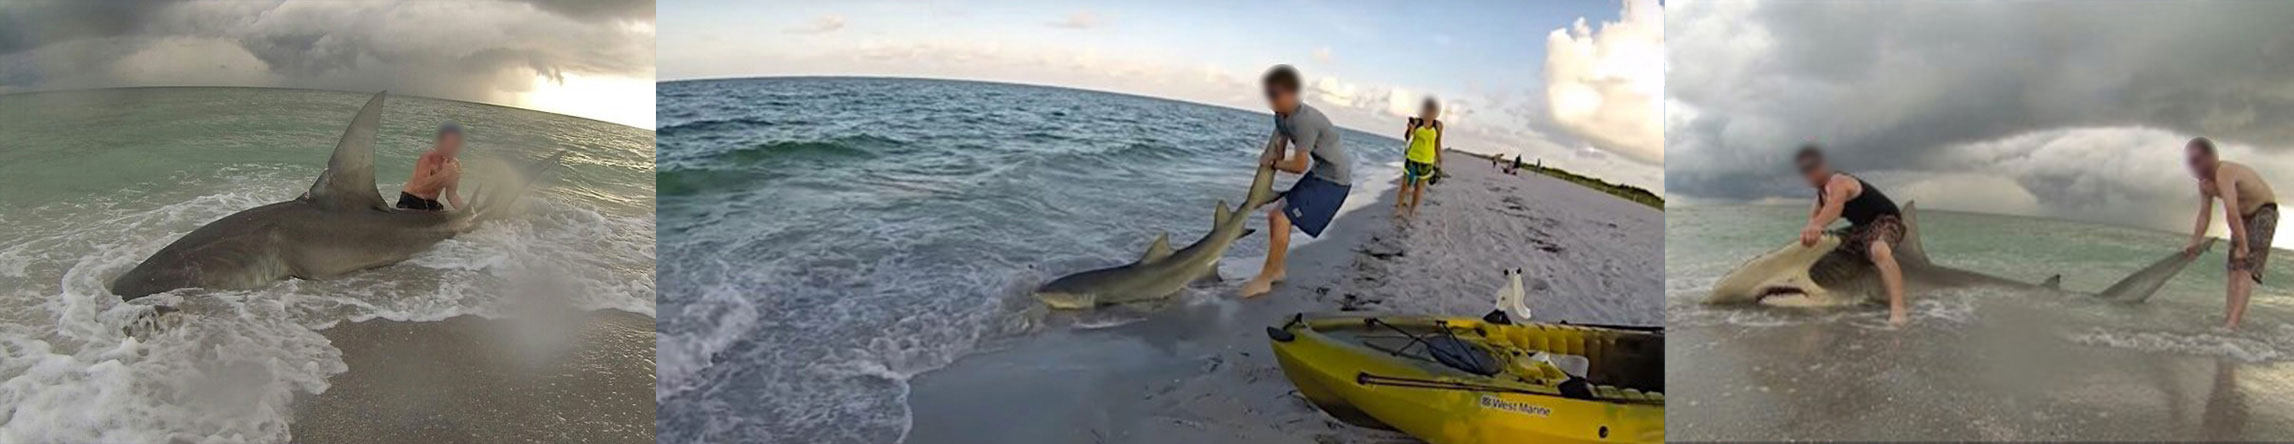 Do not pull sharks onto the beach